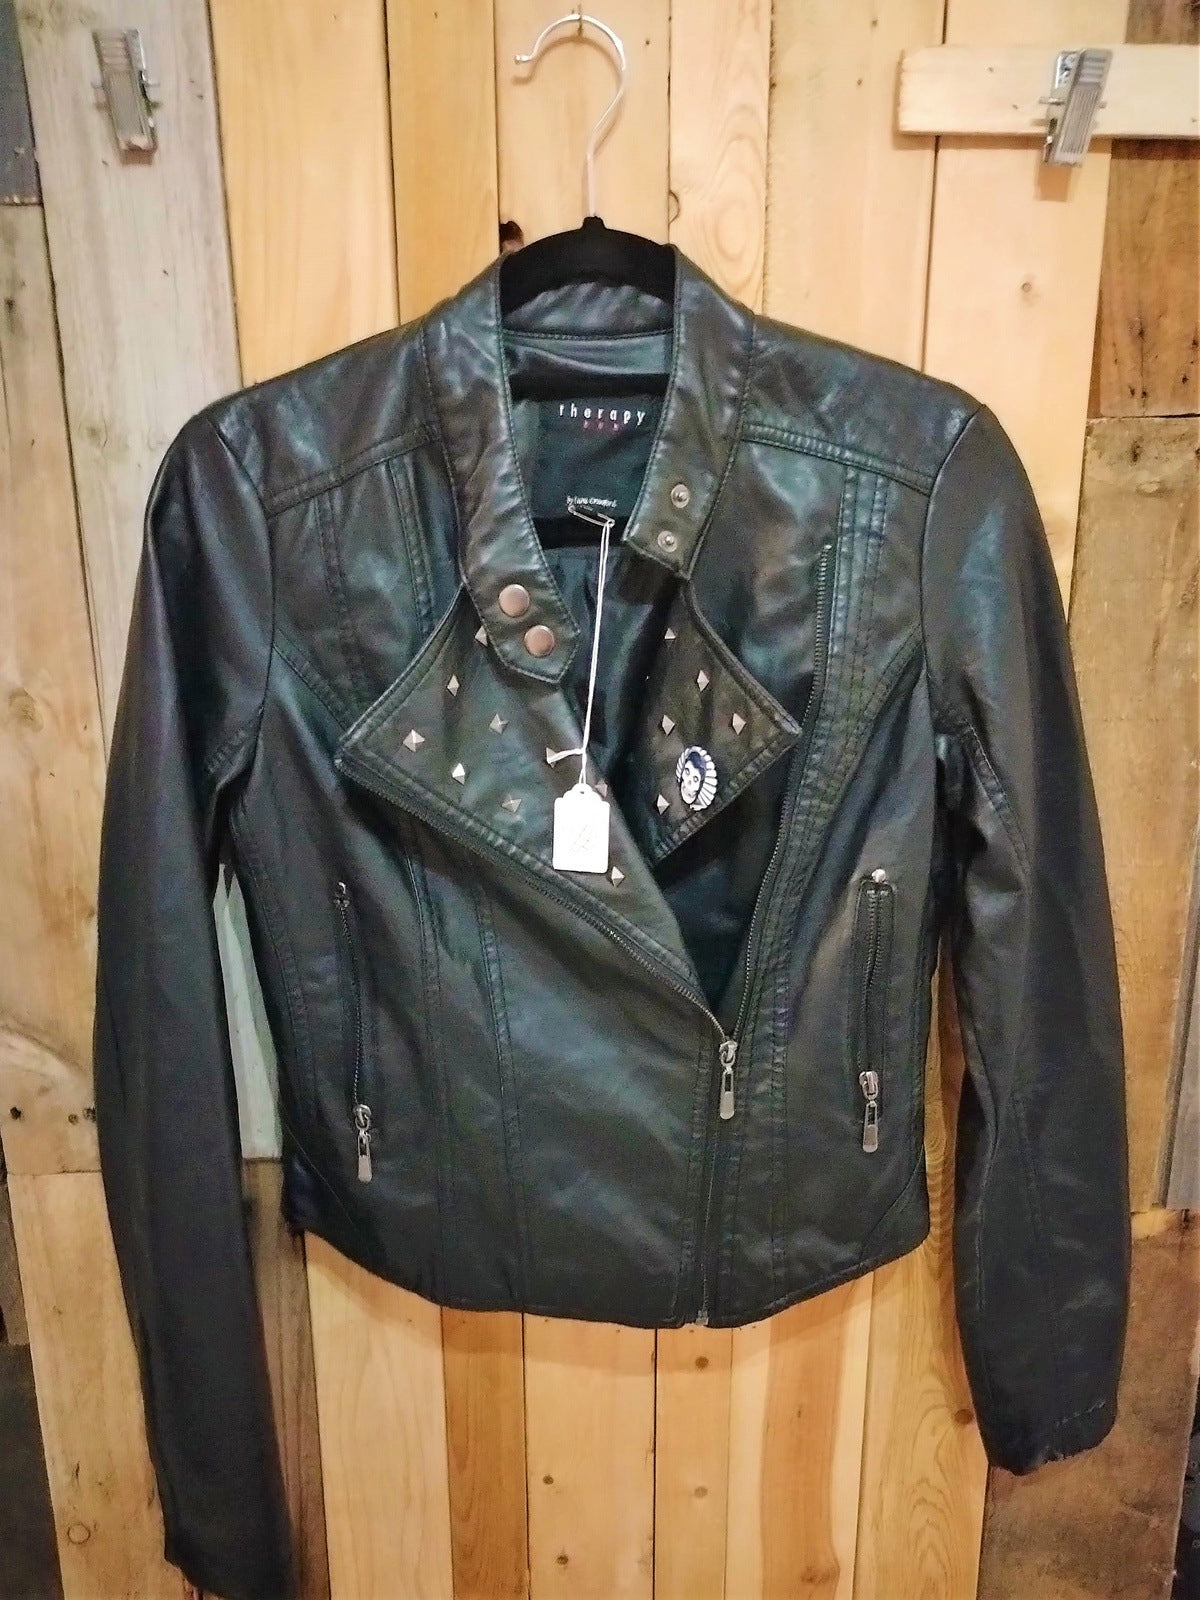 Therapy Women's Moto Jacket Vegan Leather missing 1 stud Size Medium